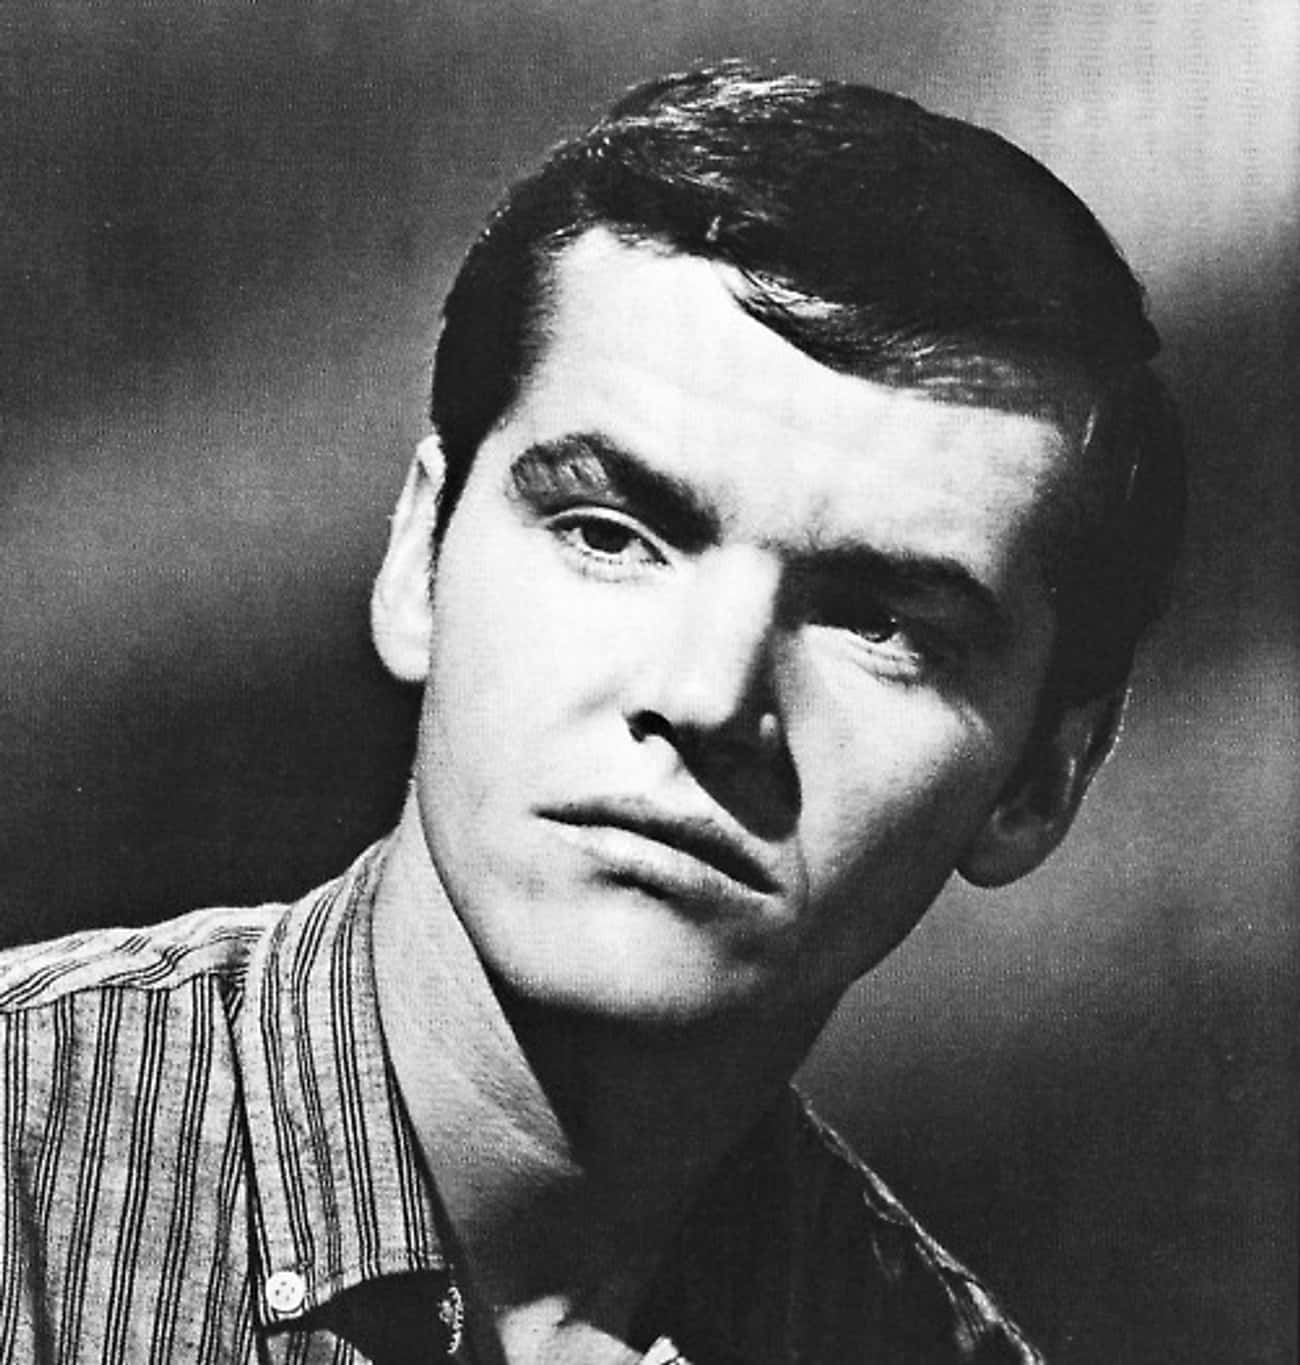 Young Jack Nicholson Closeup Headshot